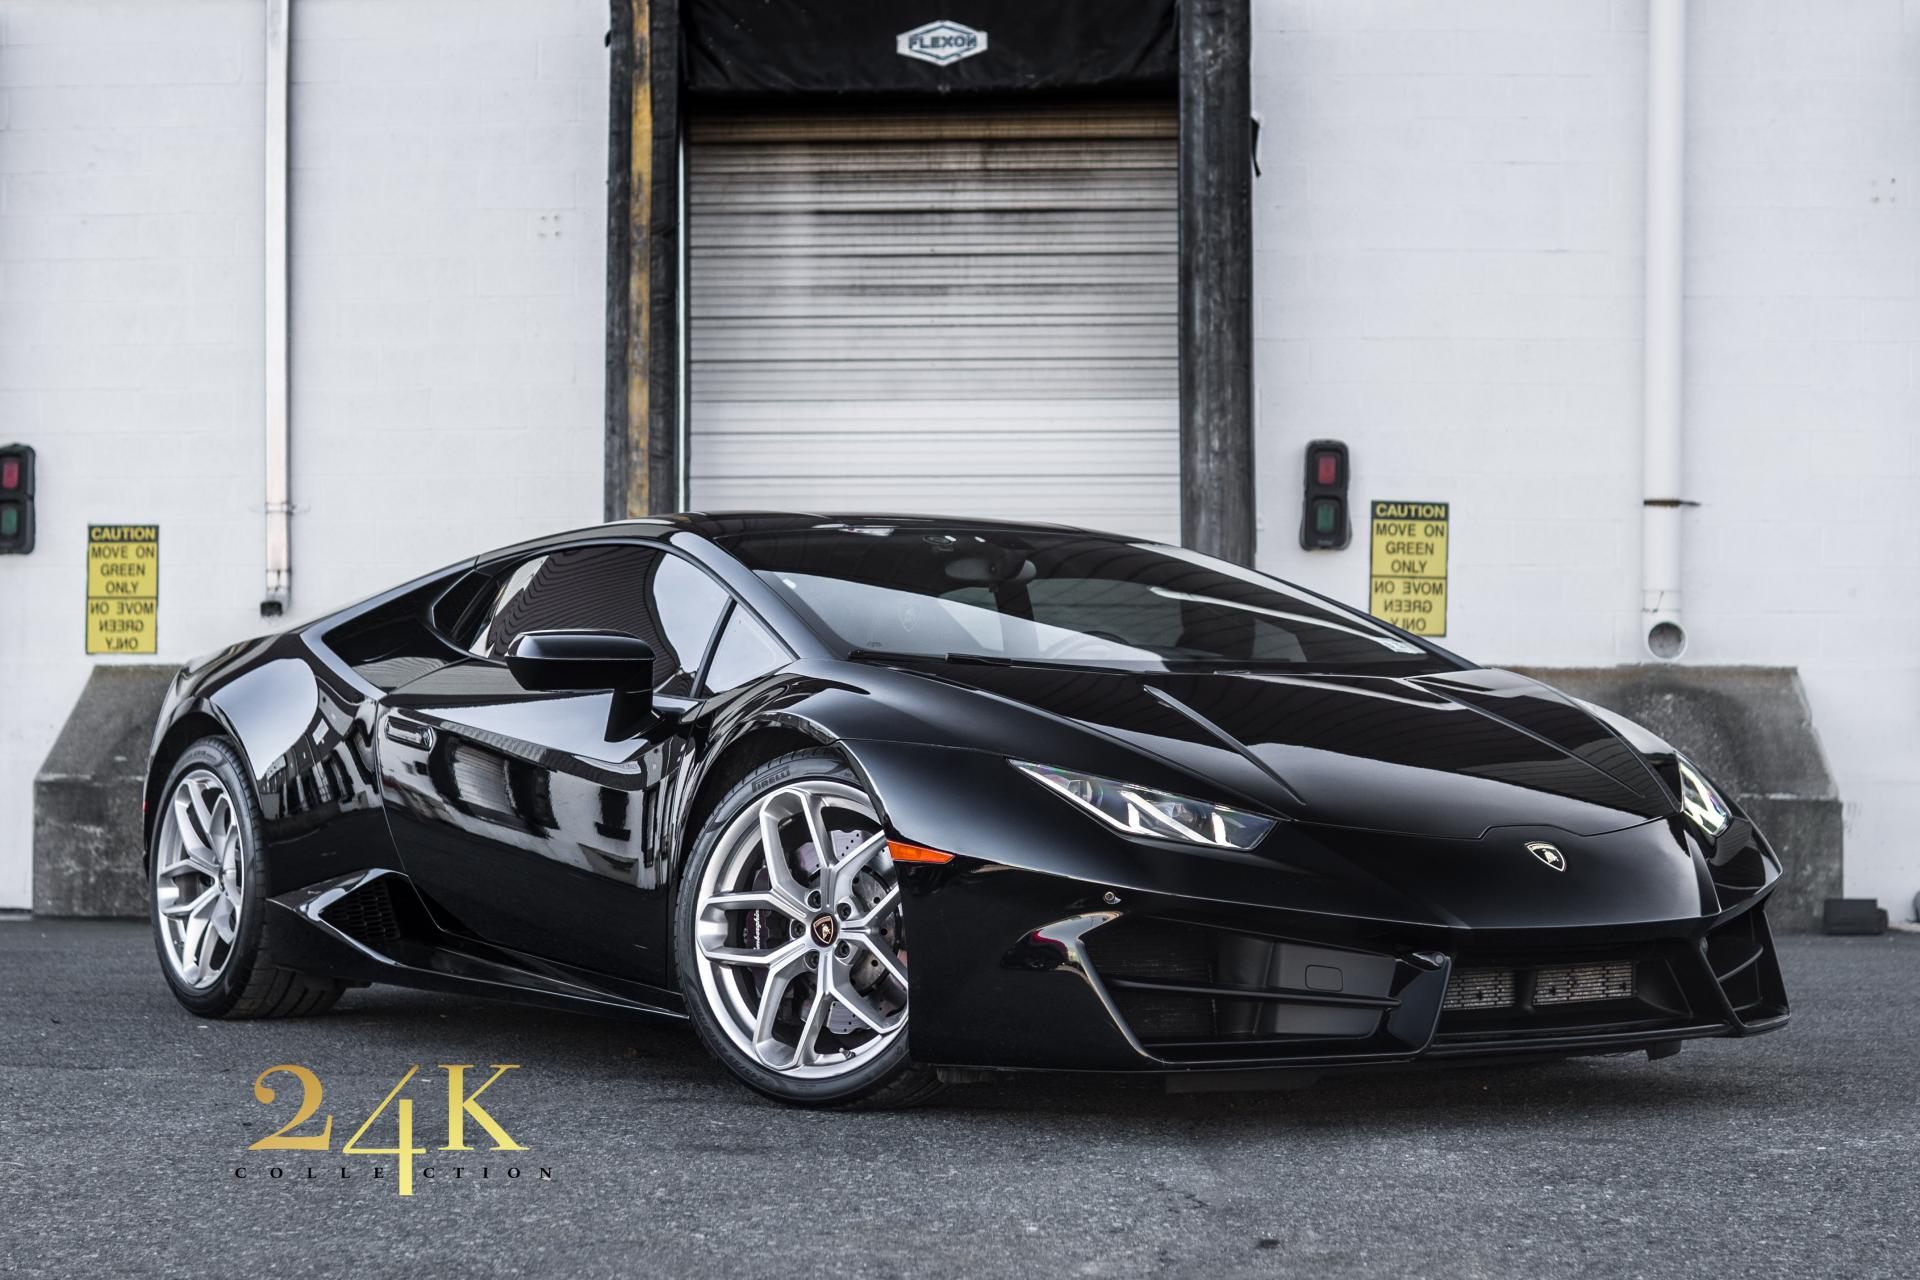 2017 Lamborghini Huracan Stock # film3975 for sale near ...